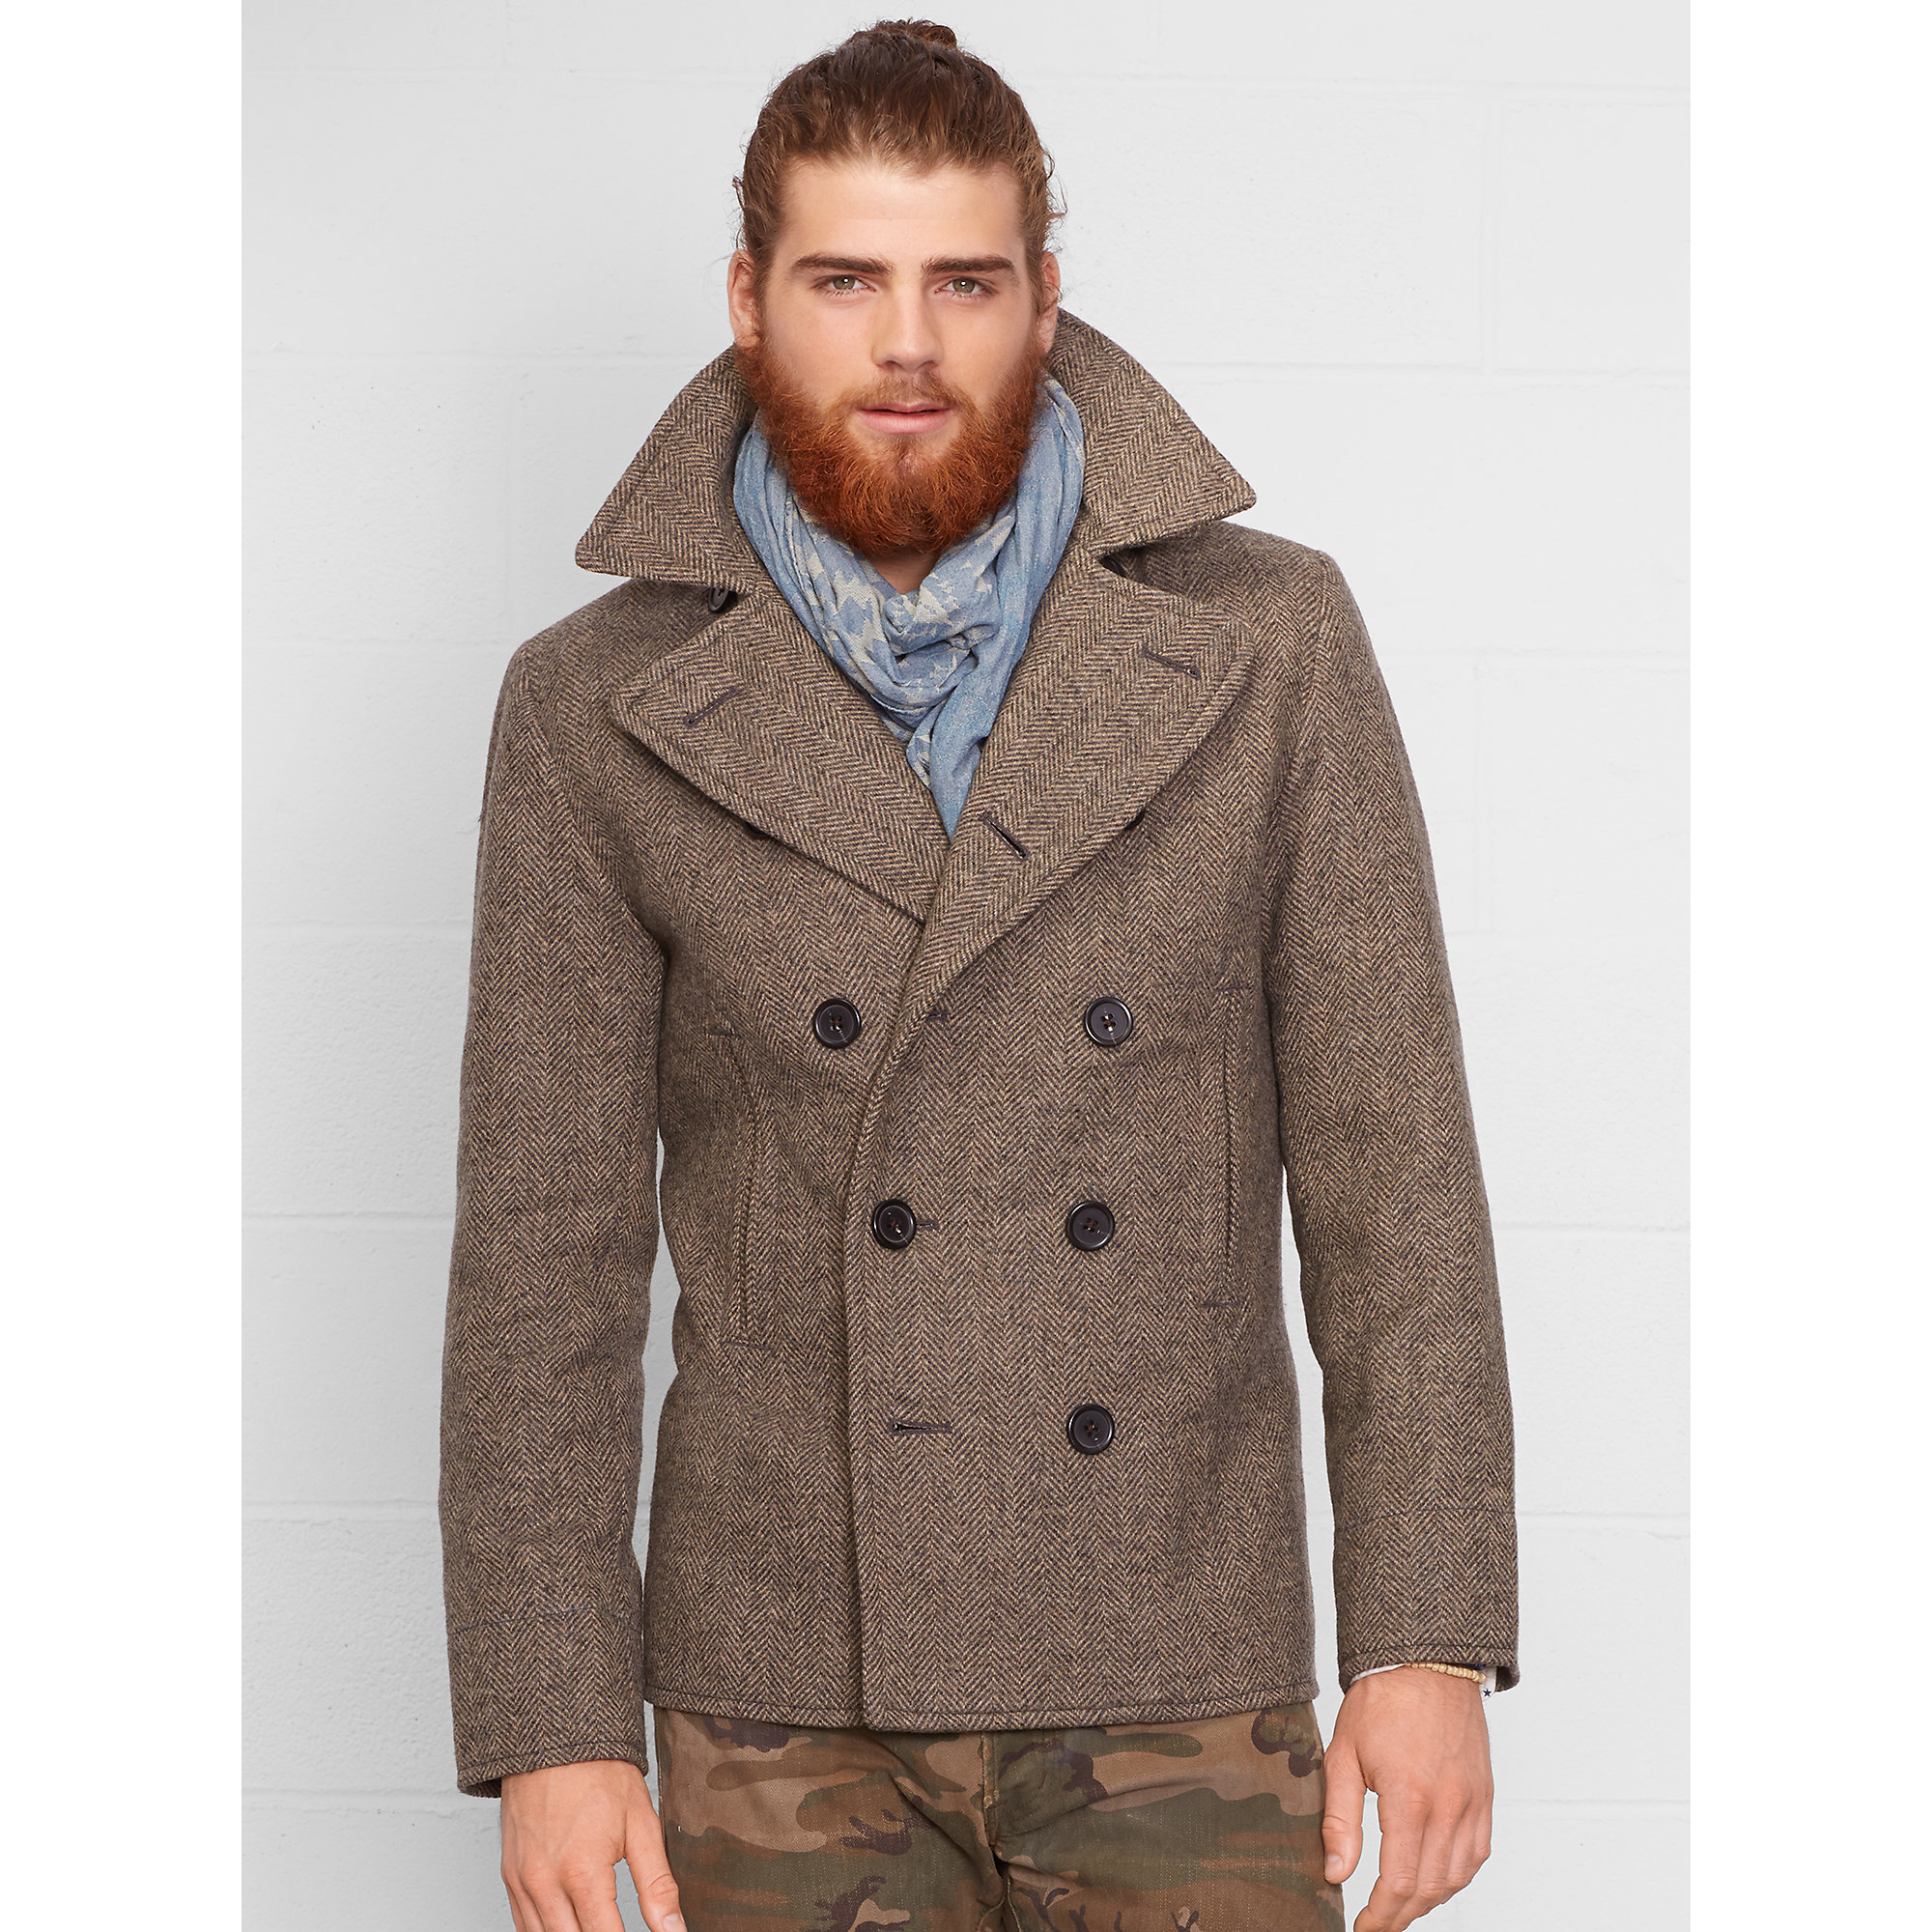 Denim & Supply Ralph Lauren Herringbone Pea Coat in Brown for Men - Lyst